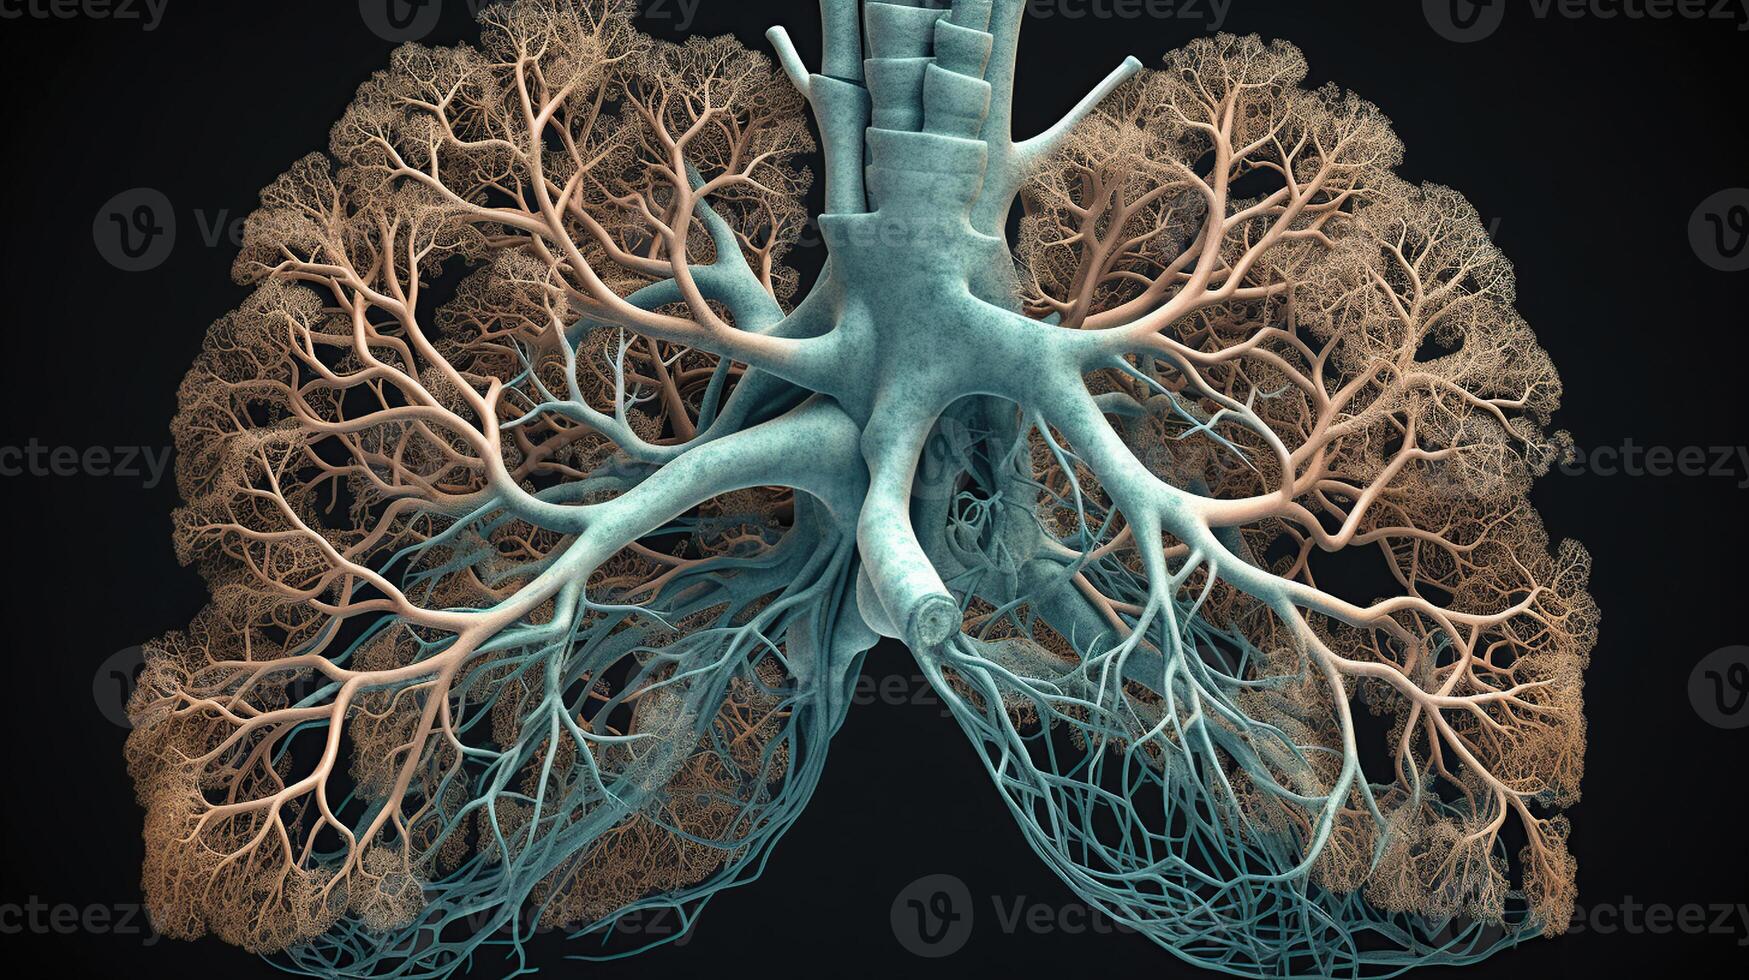 Part of Human Organic - Human Lungs, photo